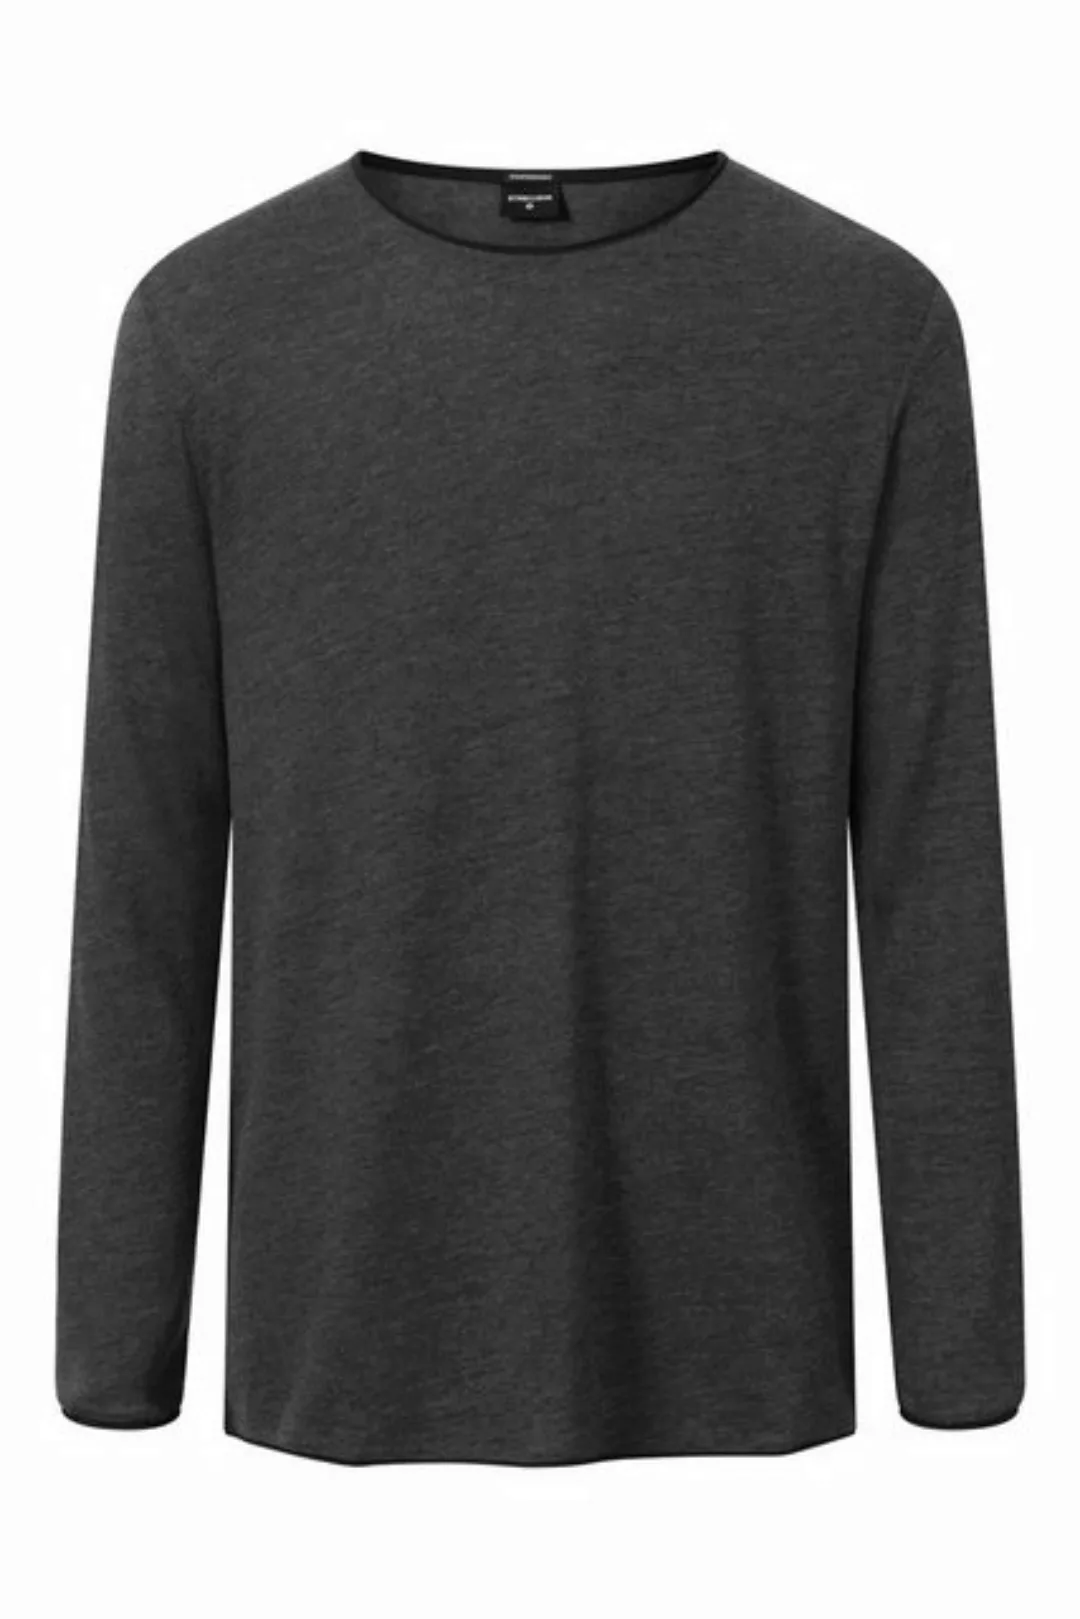 Strellson T-Shirt Prospect 30018728/001 günstig online kaufen